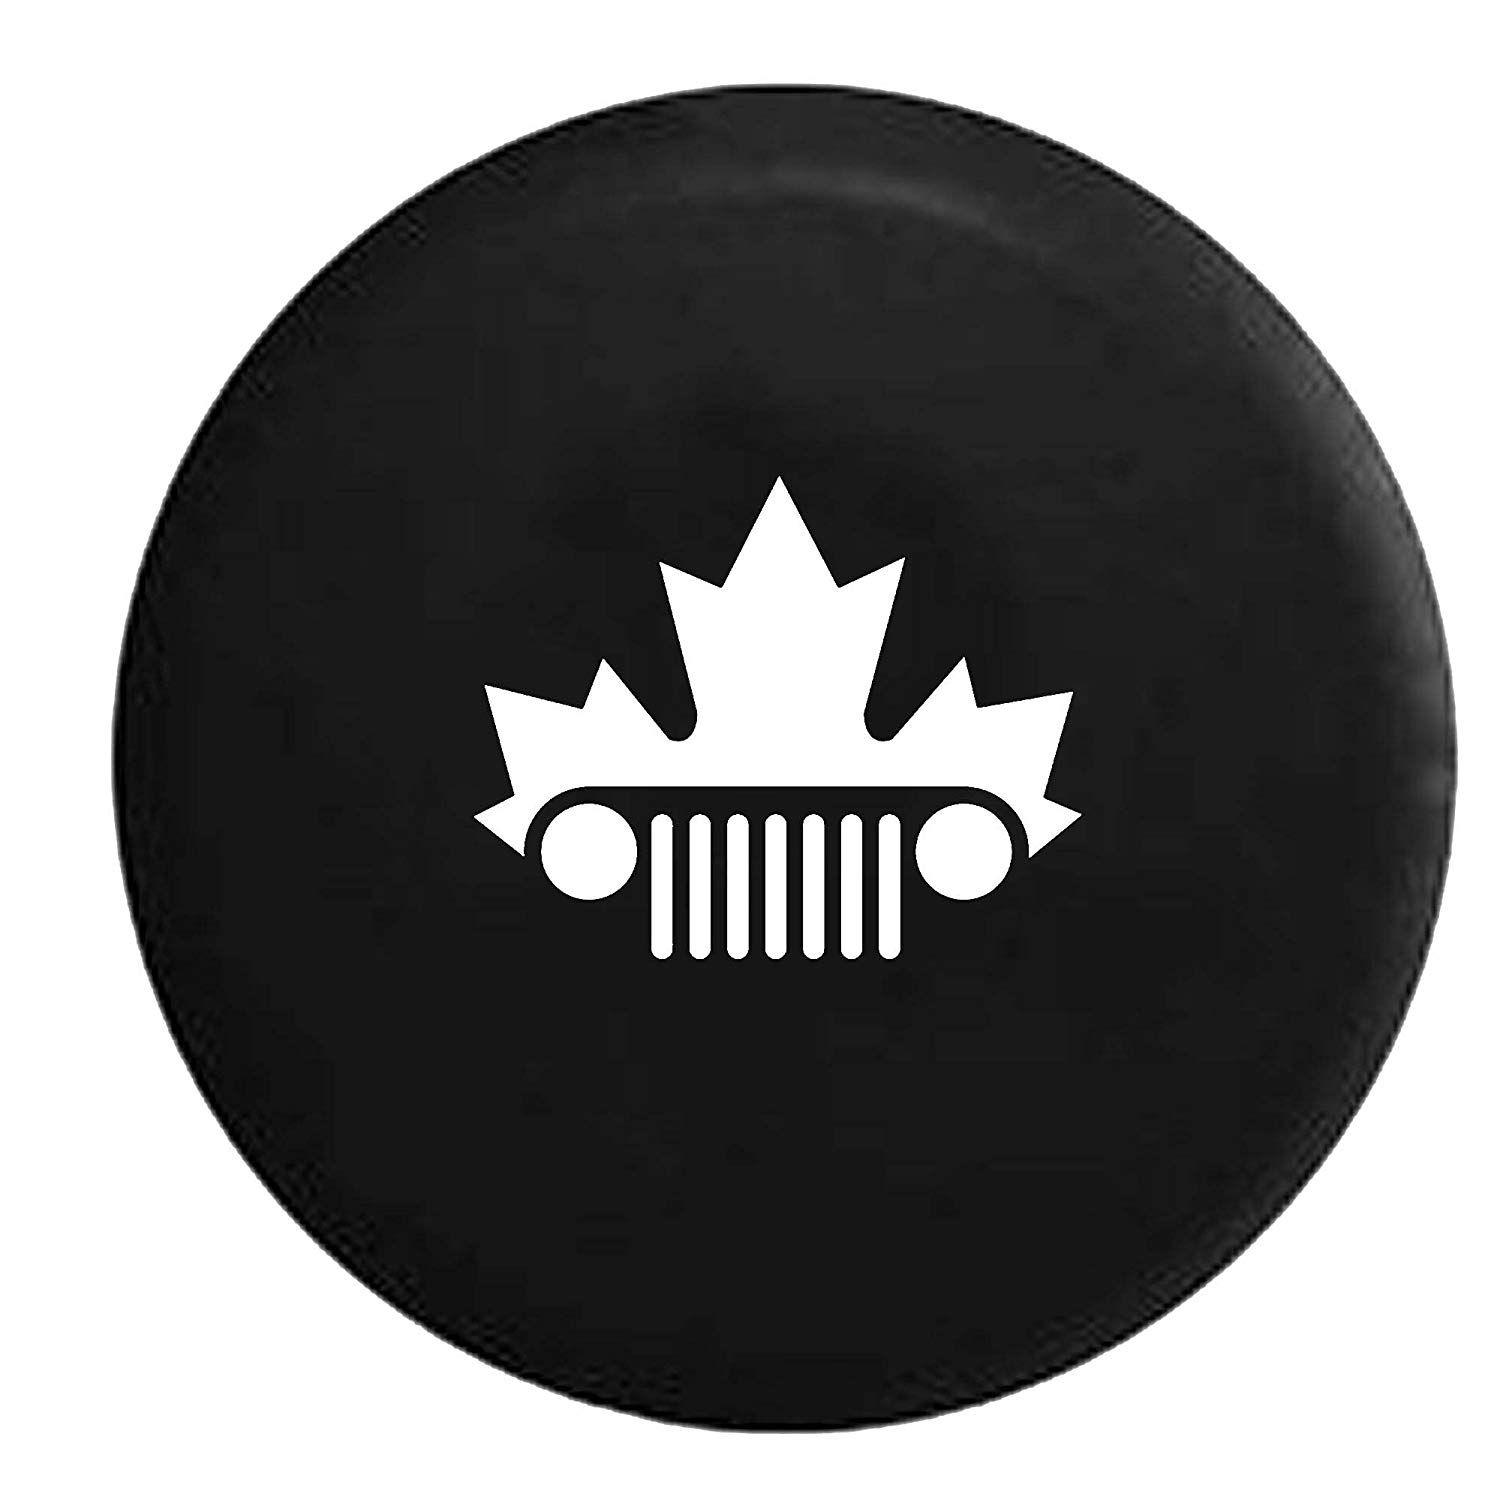 Jeep TJ Grill Logo - Amazon.com: Jeep Wrangler JK TJ Grill Canadian Maple Leaf Mountie ...